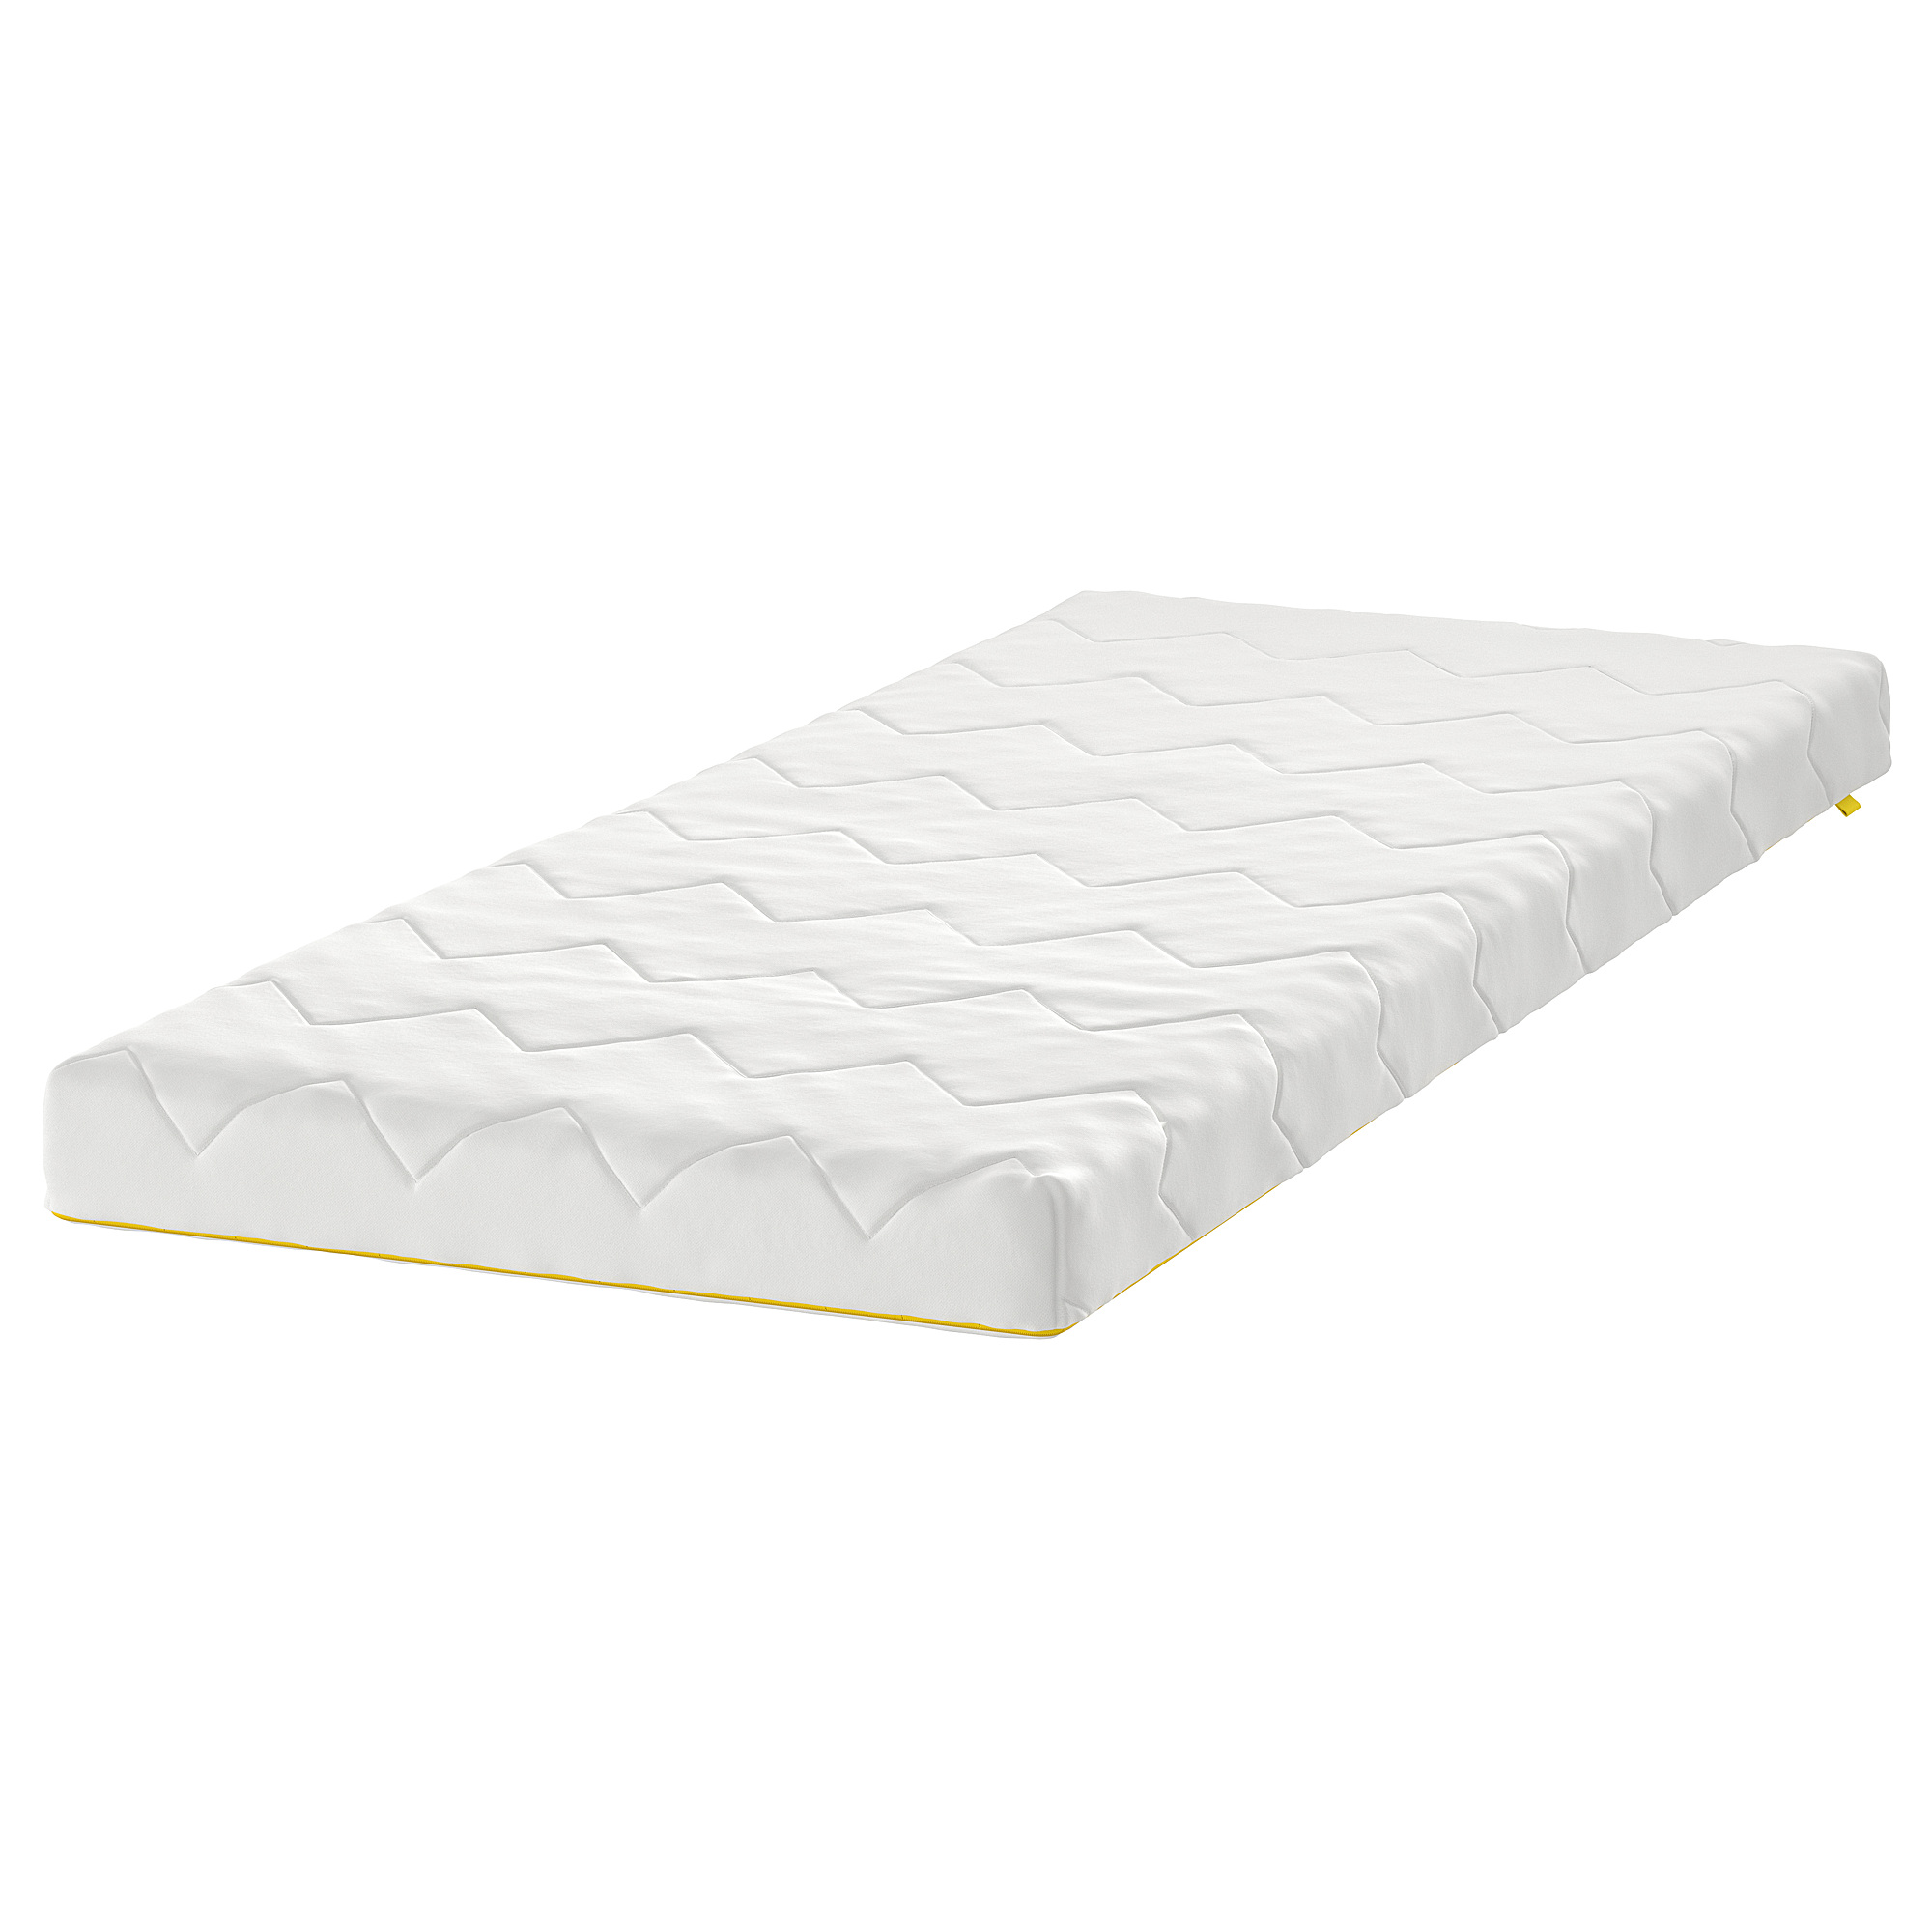 UNDERLIG foam mattress for junior bed